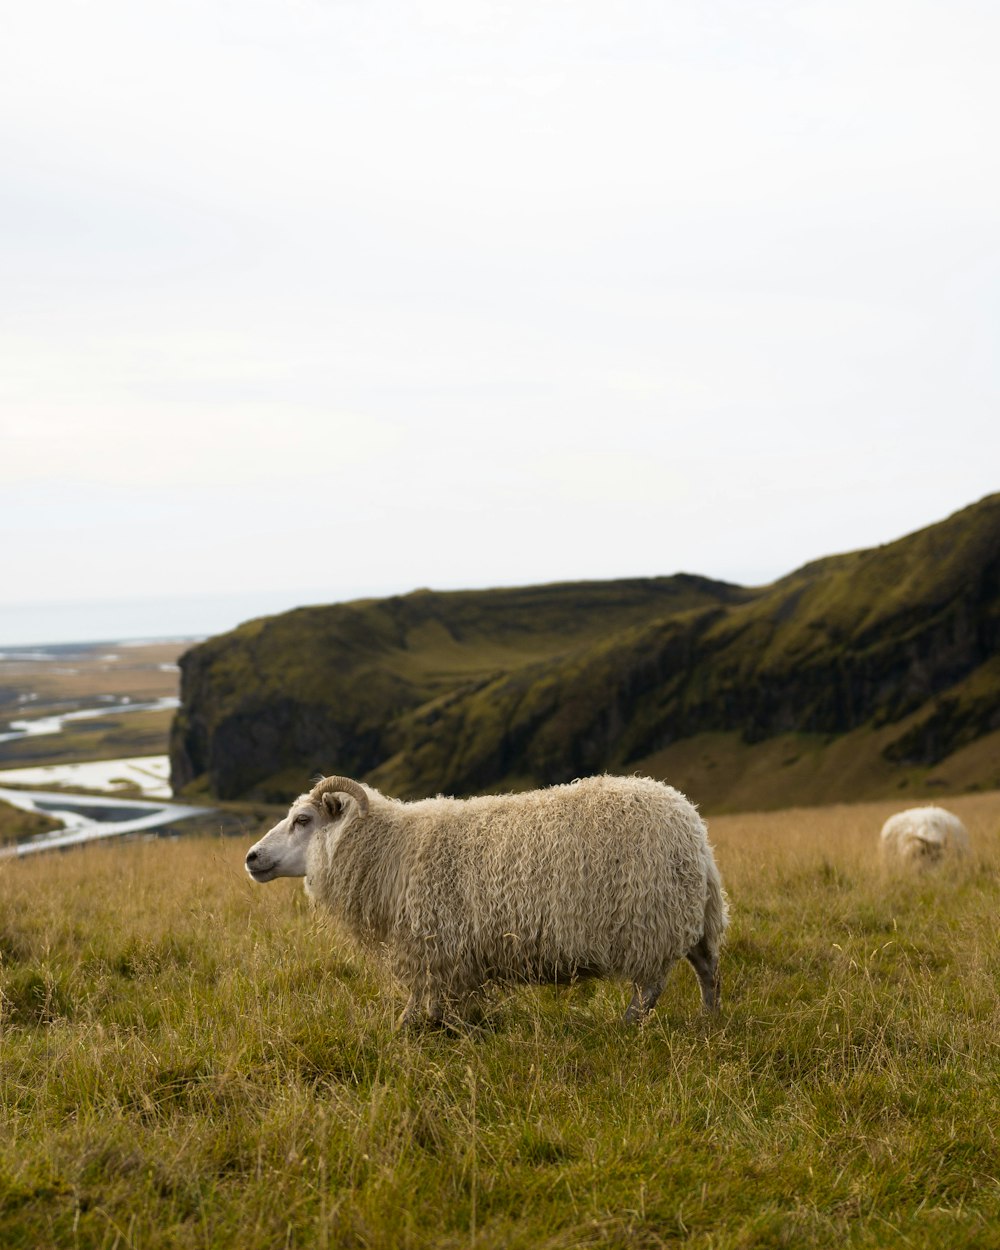 lamb standing on grass field near mountain range